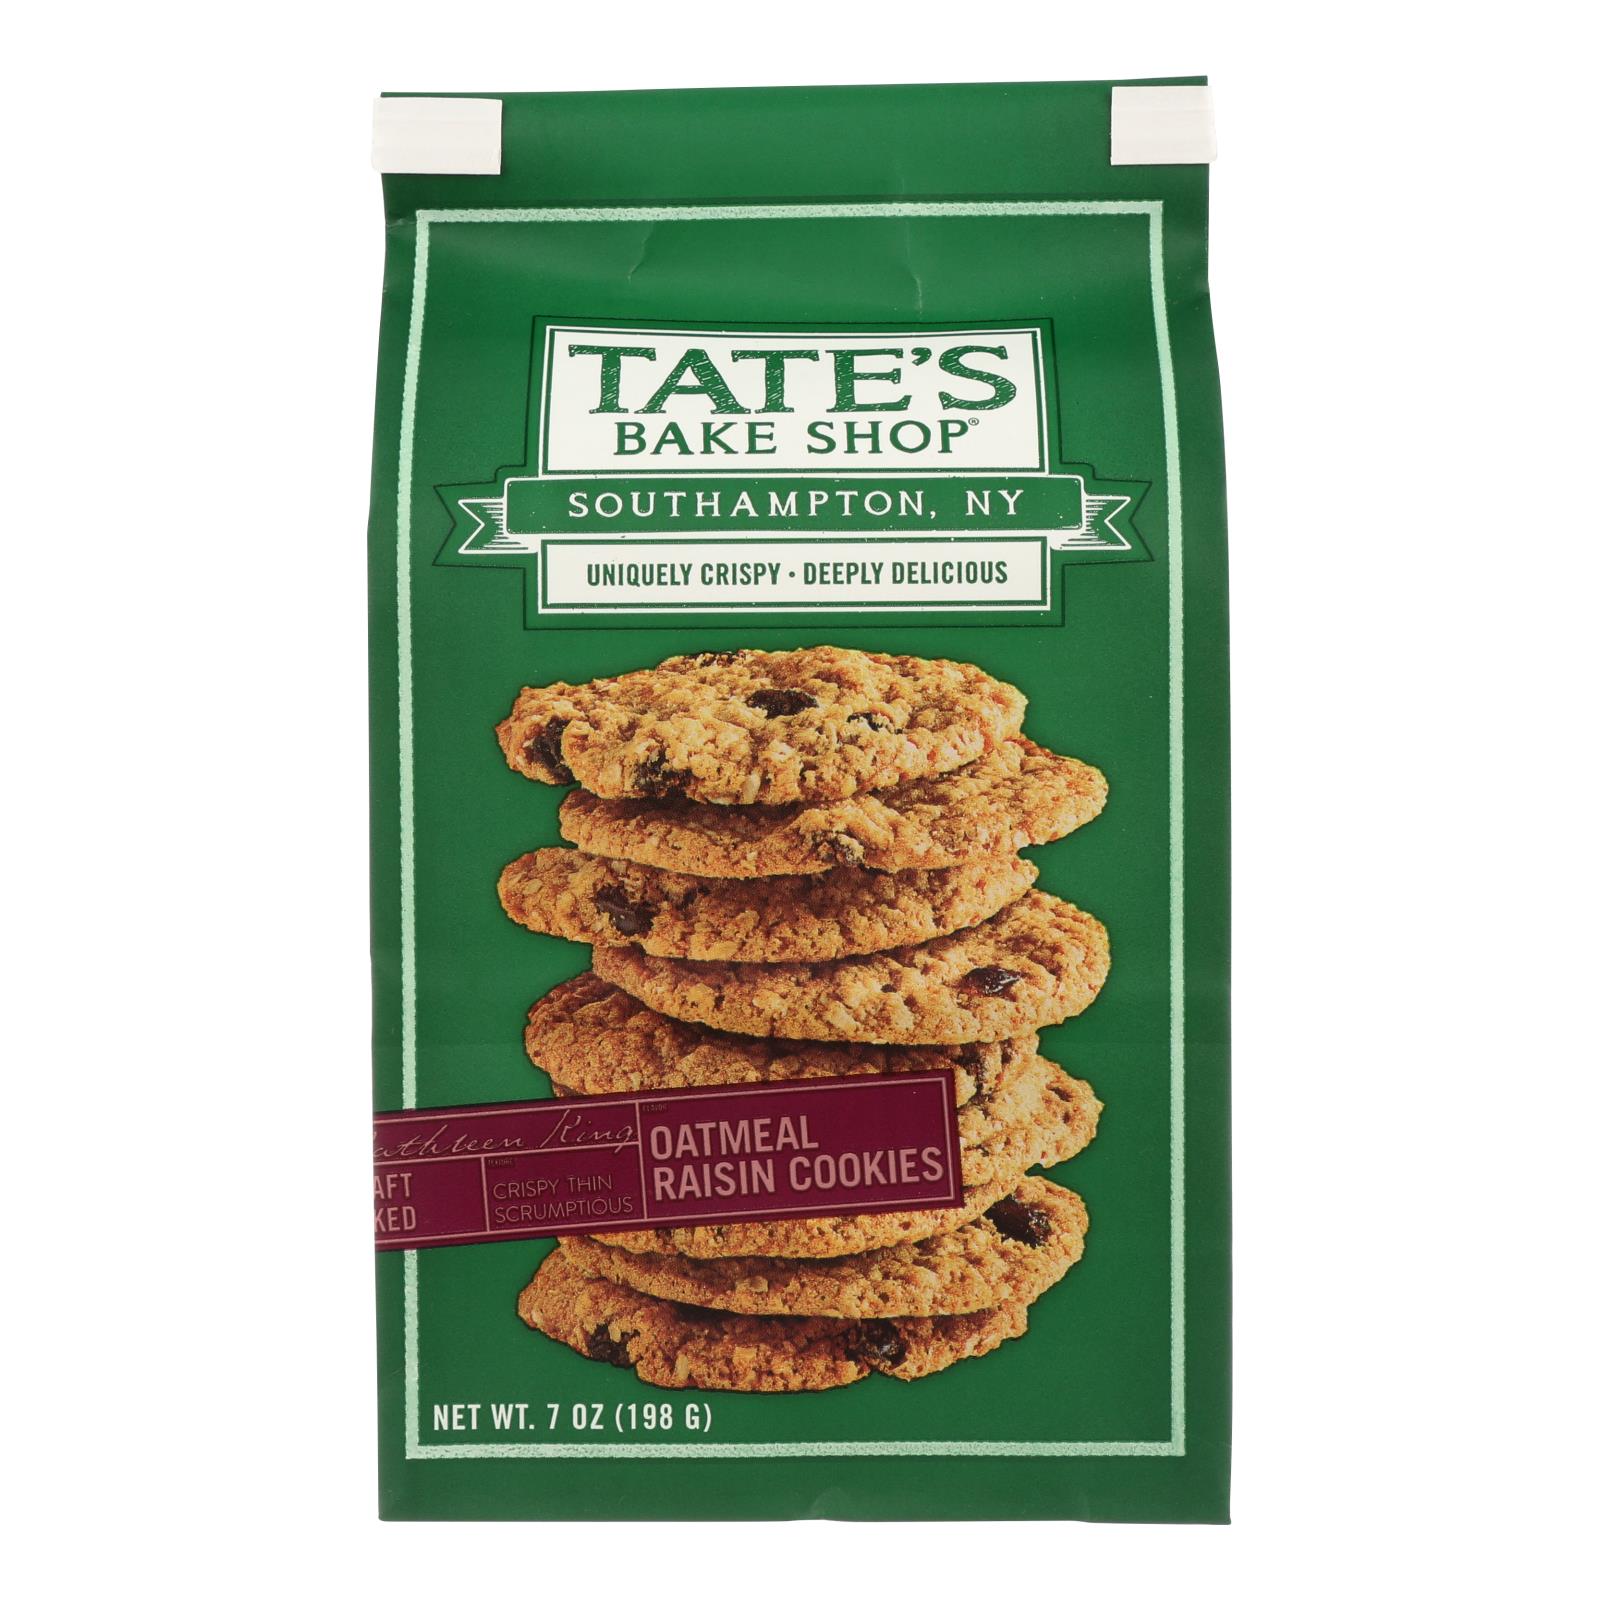 Tate's Bake Shop Oatmeal Raisin Cookies - 12개 묶음상품 - 7 OZ